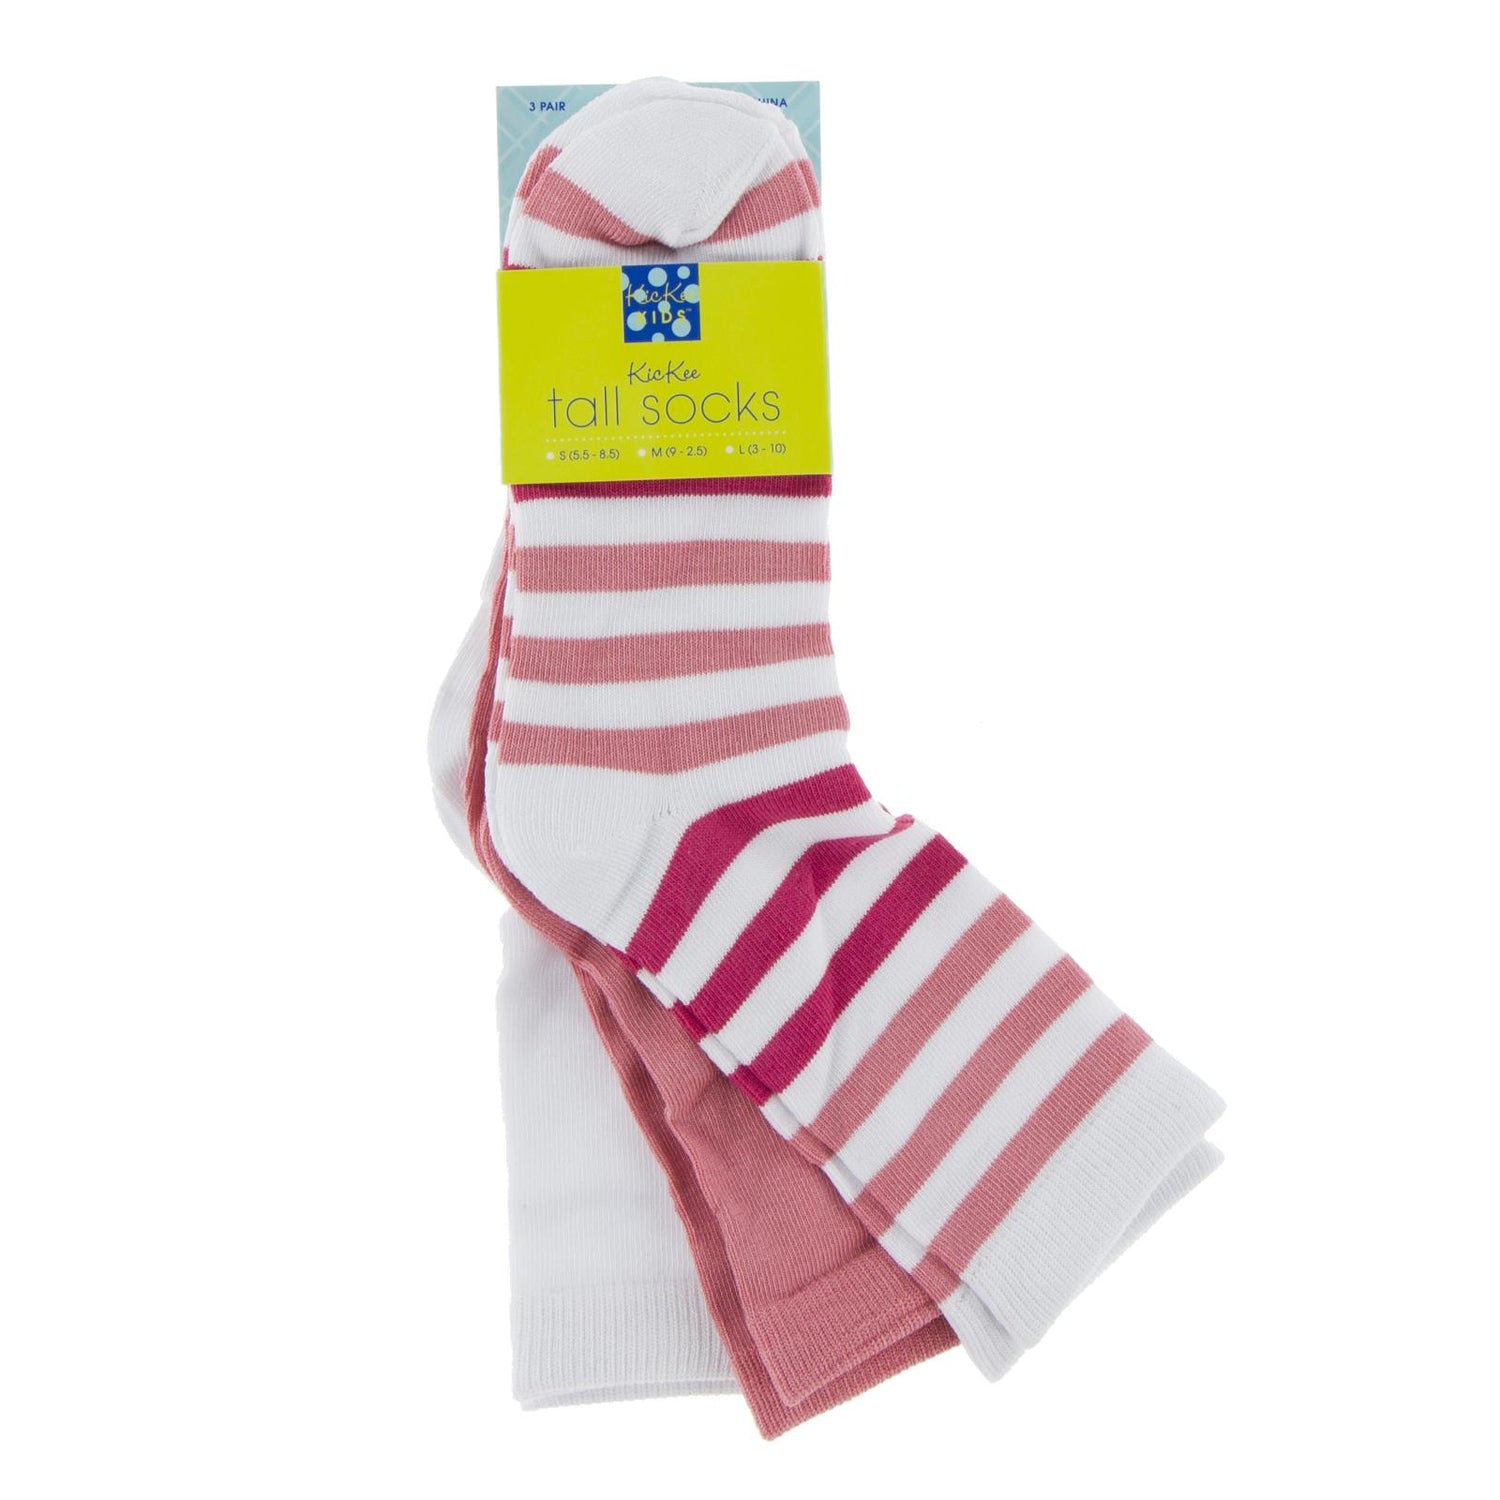 Sock Set in Strawberry, Forest Fruit Stripe & Natural